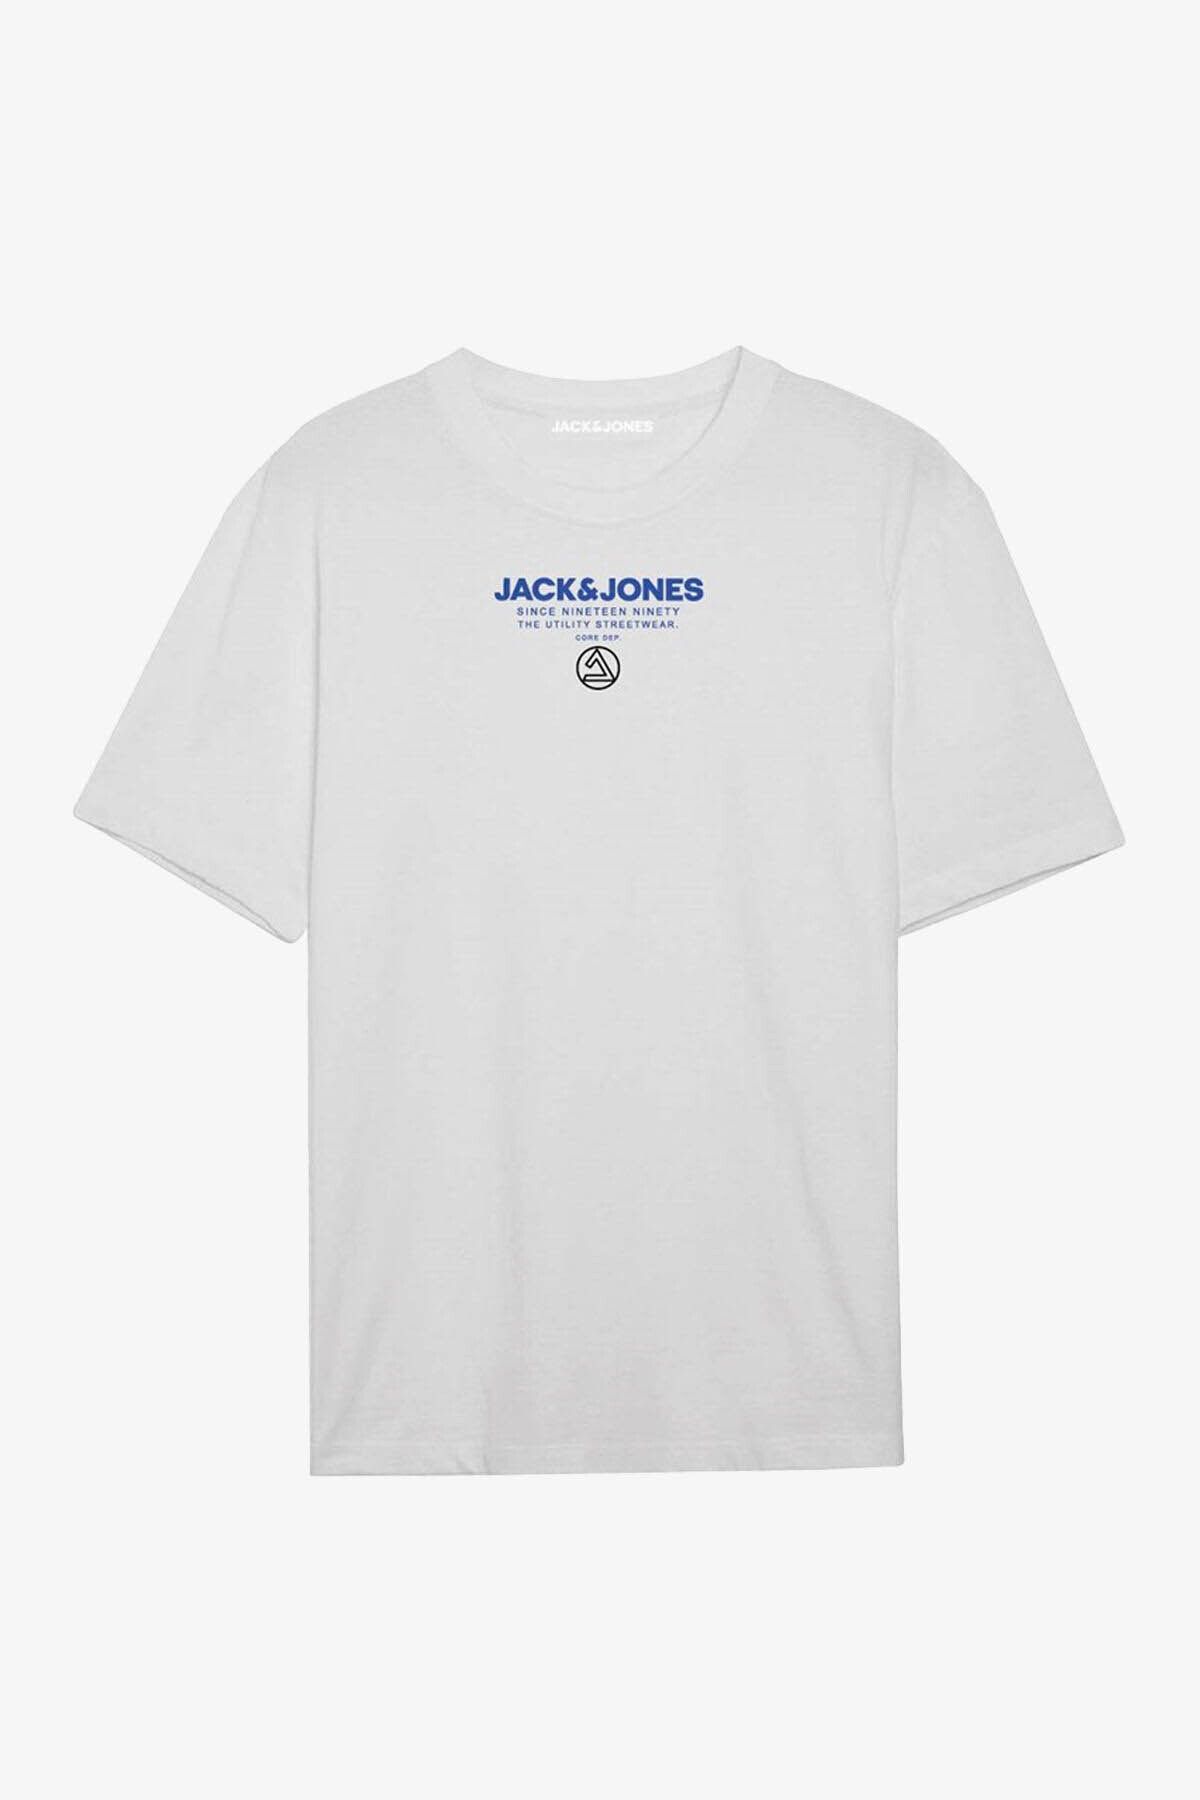 Jack & Jones Erkek T-shirt Beyaz 12256163